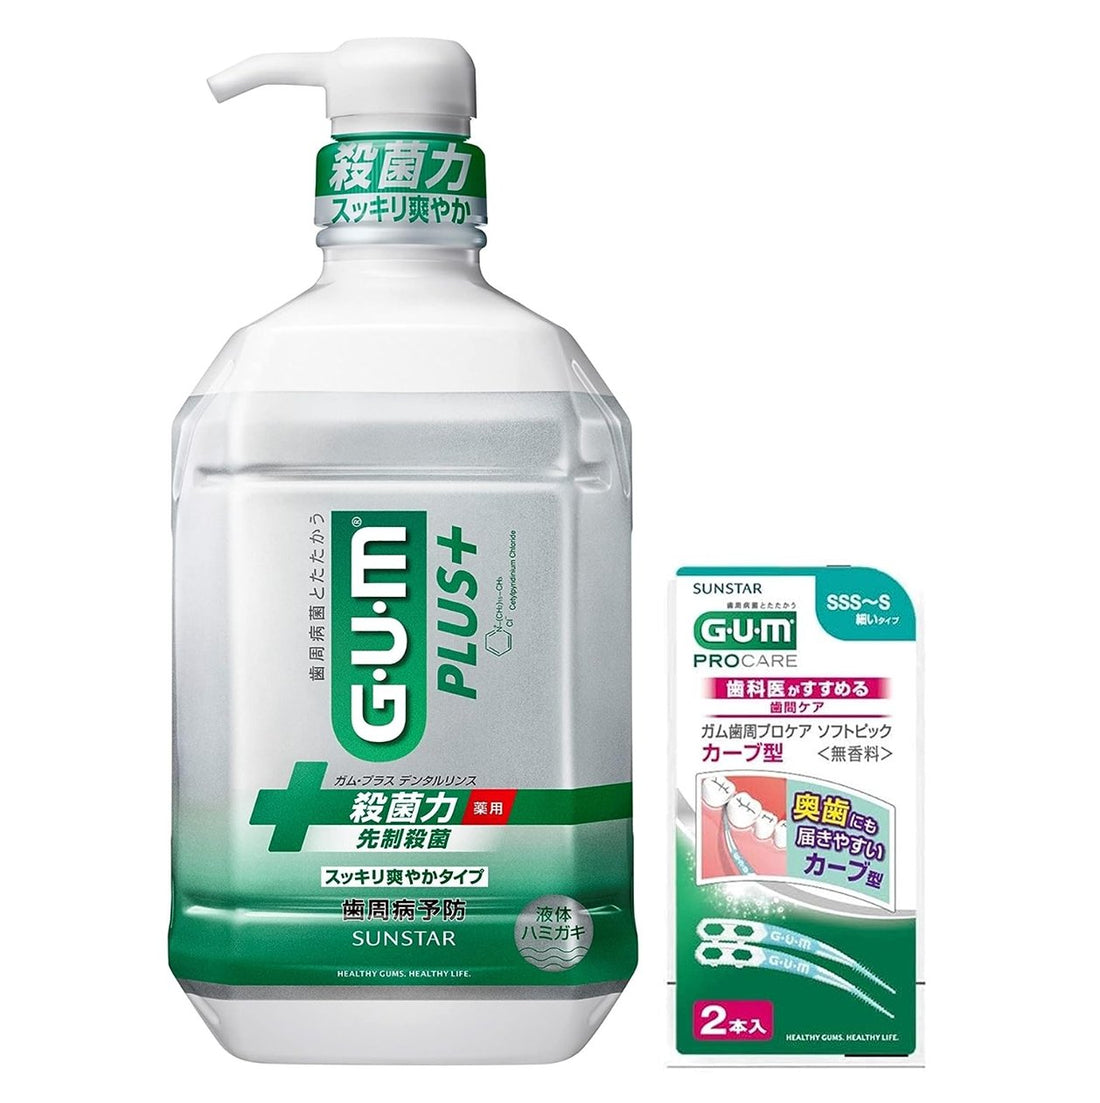 GUM Plus [Quasi-drug] Dental rinse, medicated, liquid toothpaste [refreshing type (alcohol combination), herbal mint] 900ml x 1 bottle + bonus - NihonMura